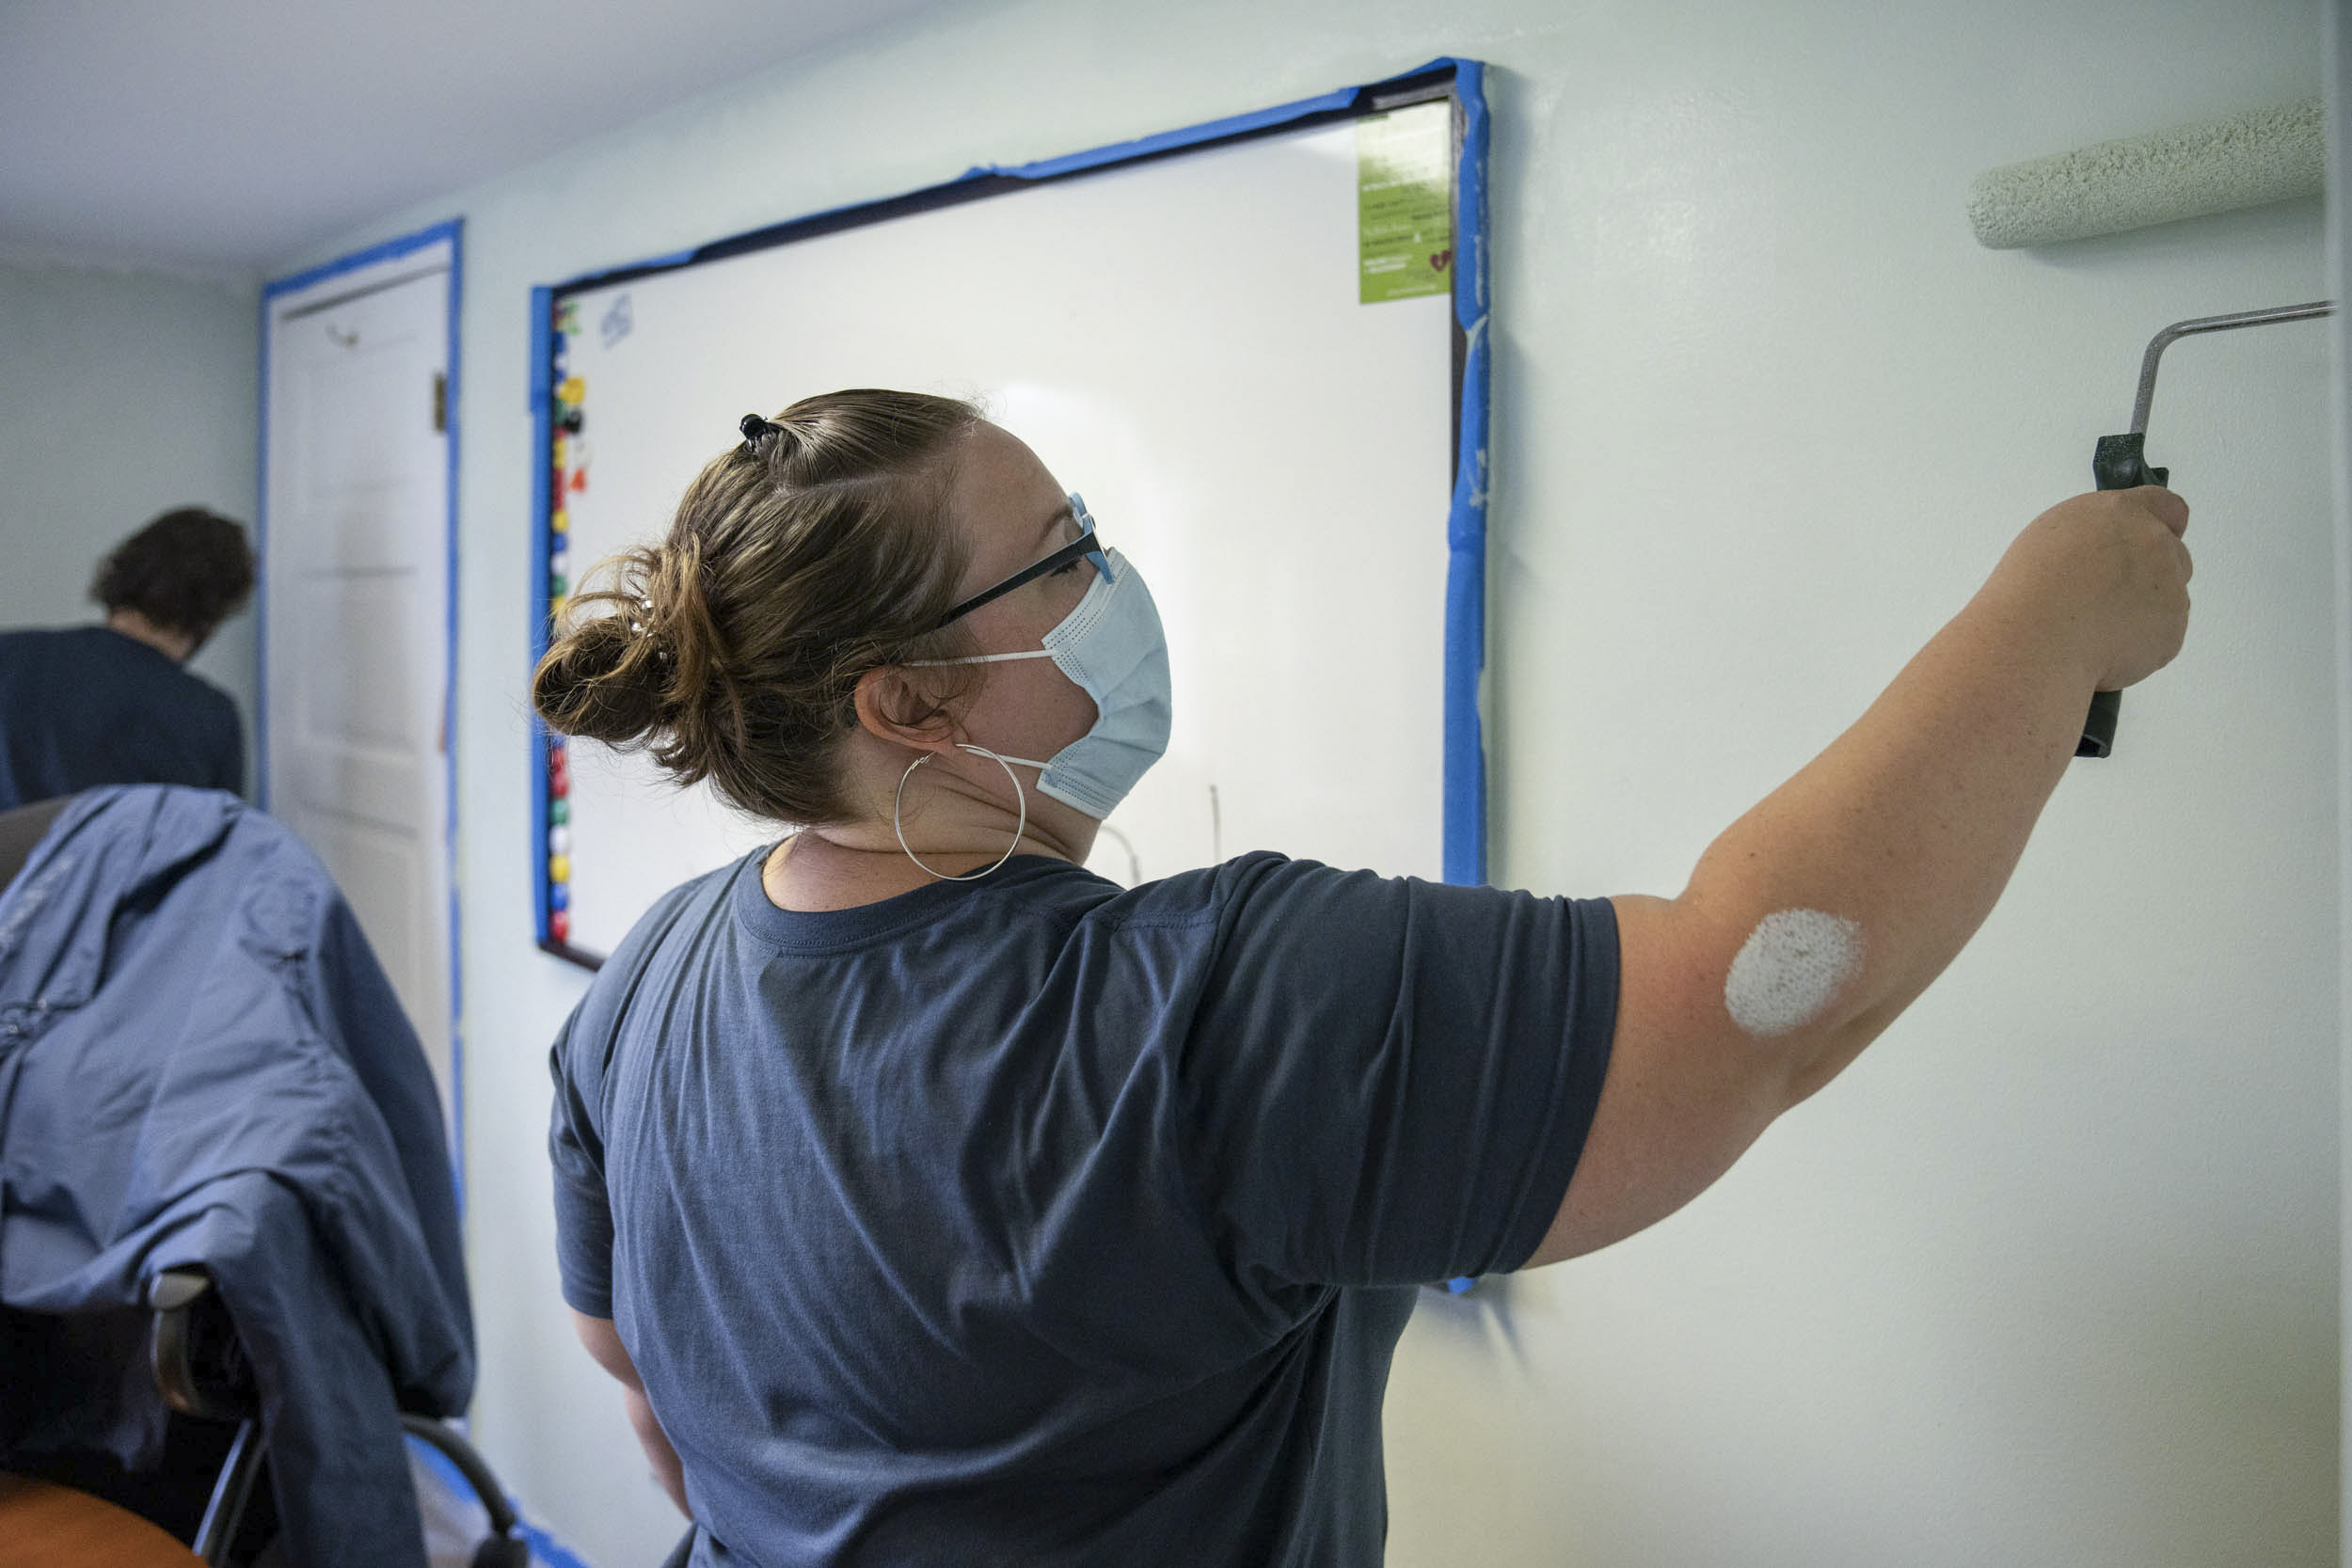 UVA staff member painting a wall